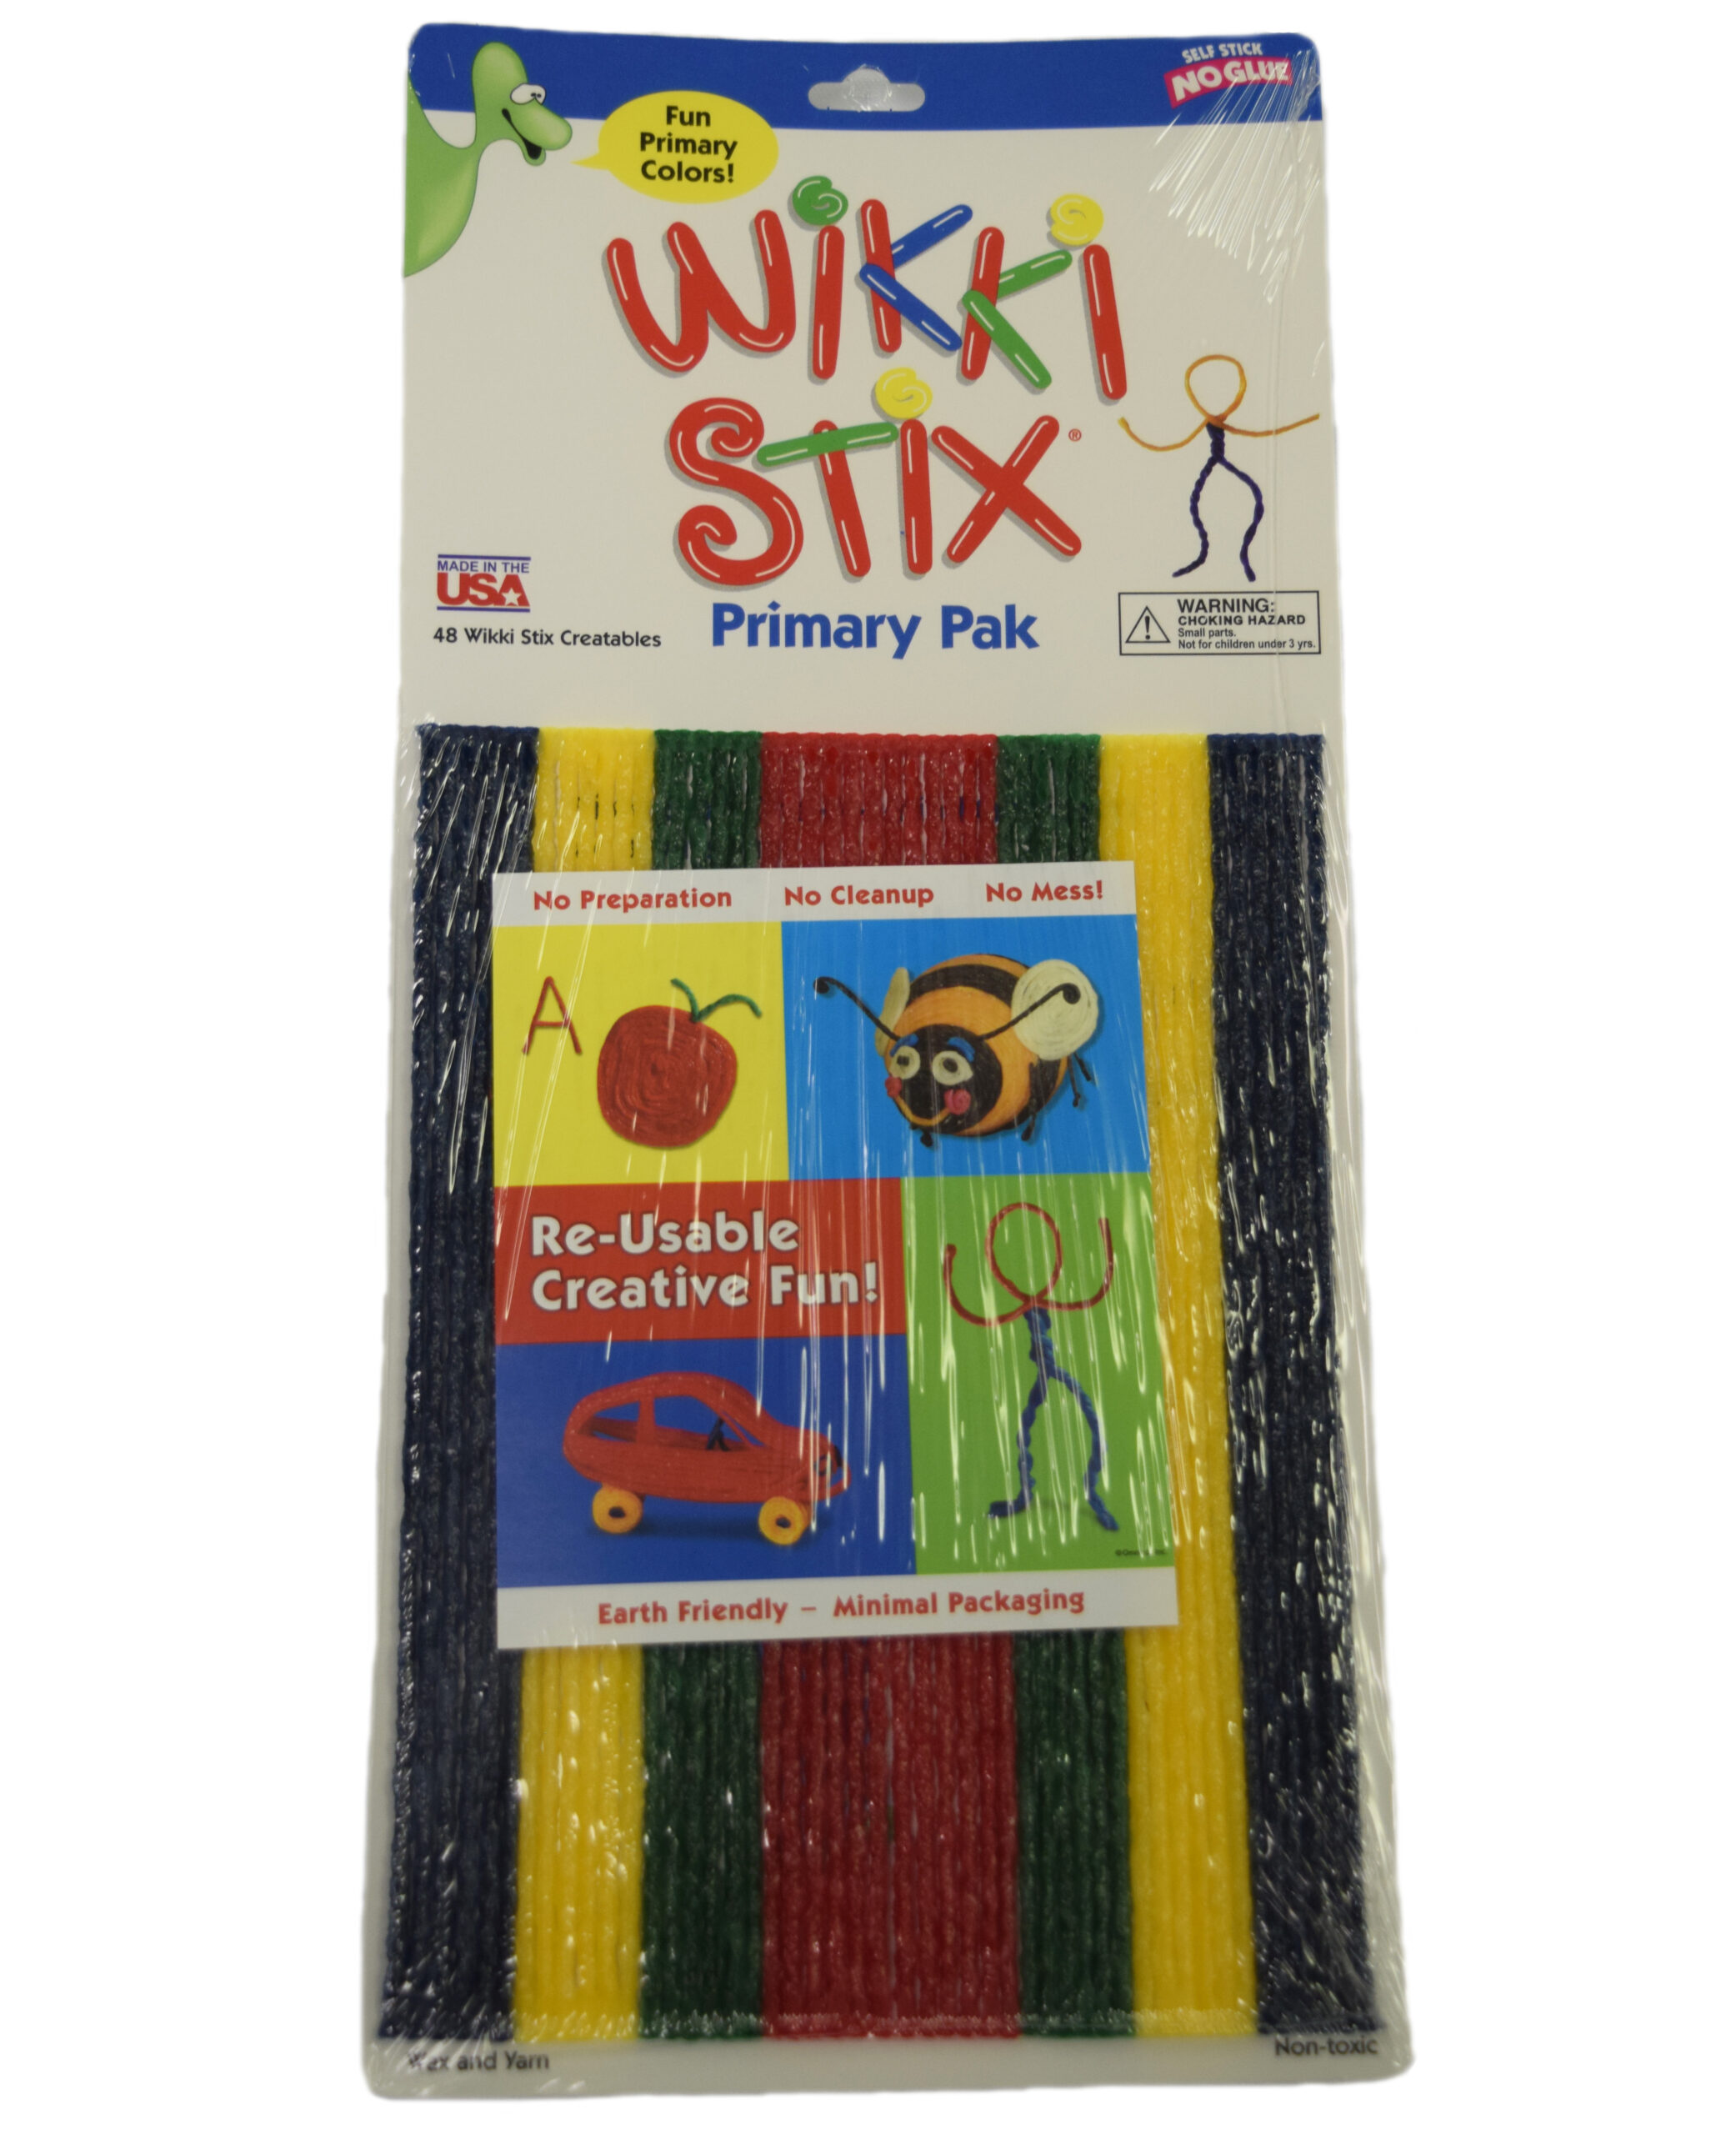 Wikki Stix One-of-a-Kind Creatables